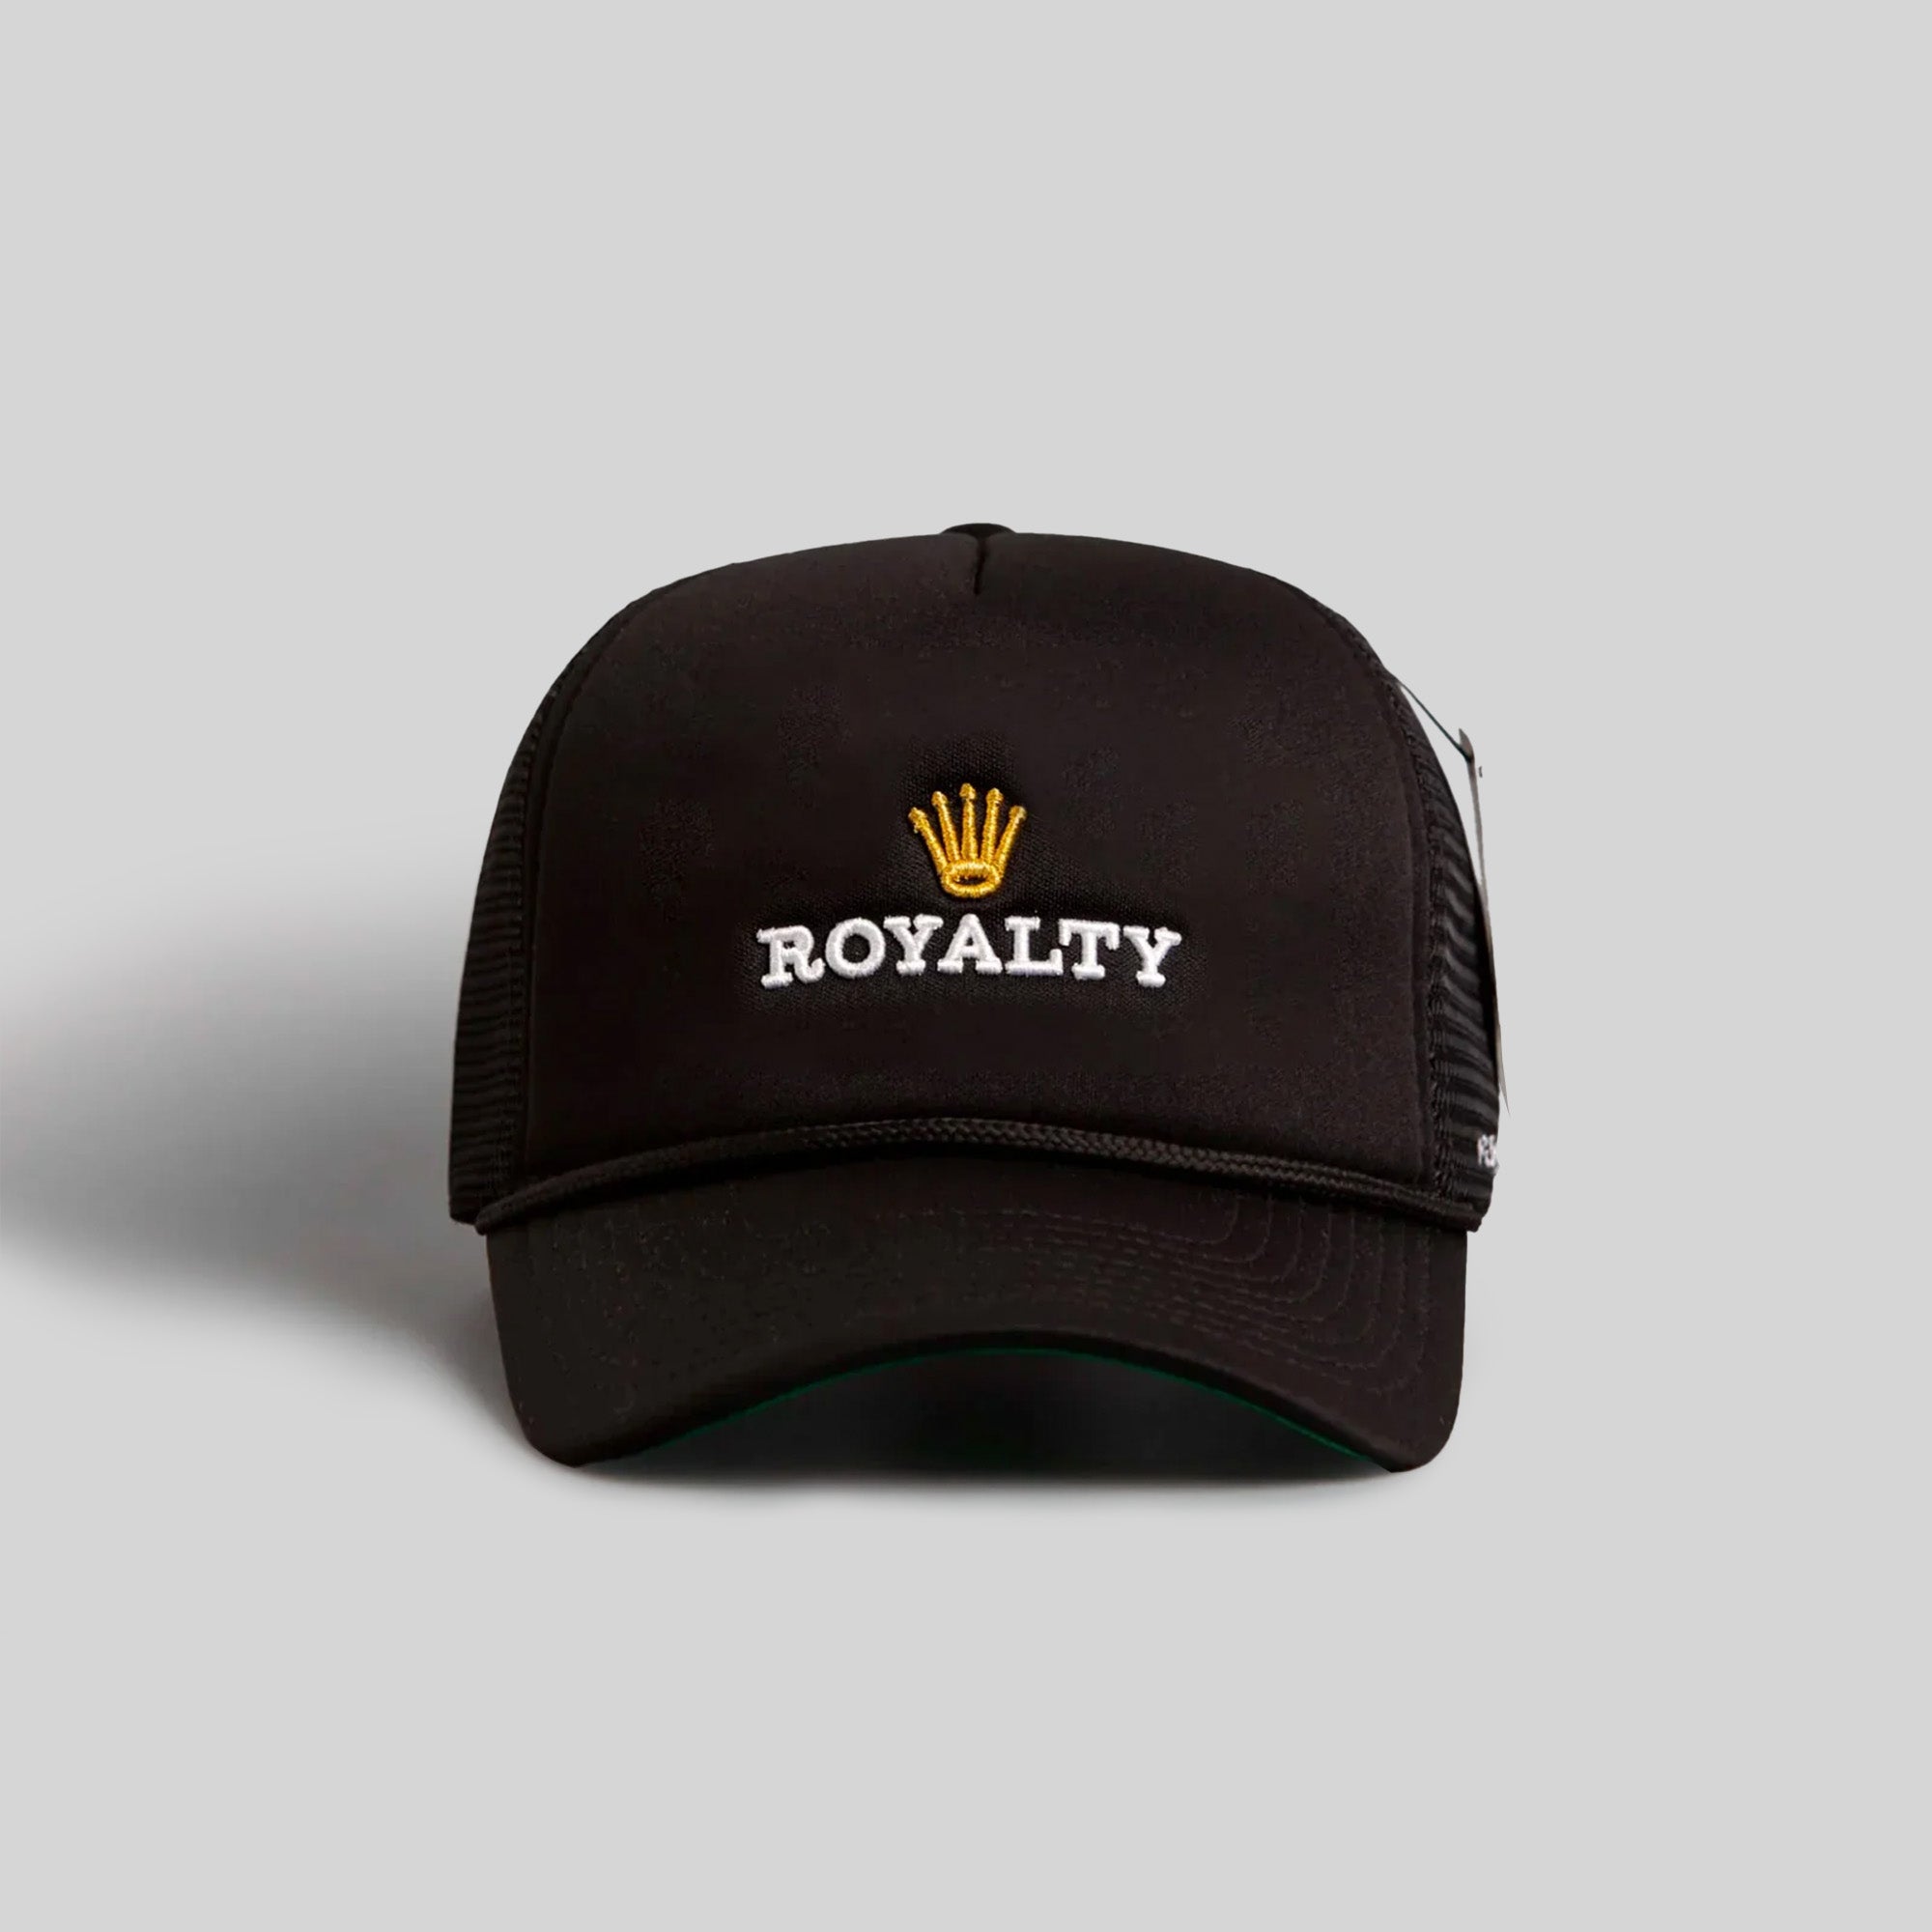 ROYALTY BLACK TRUCKER HAT